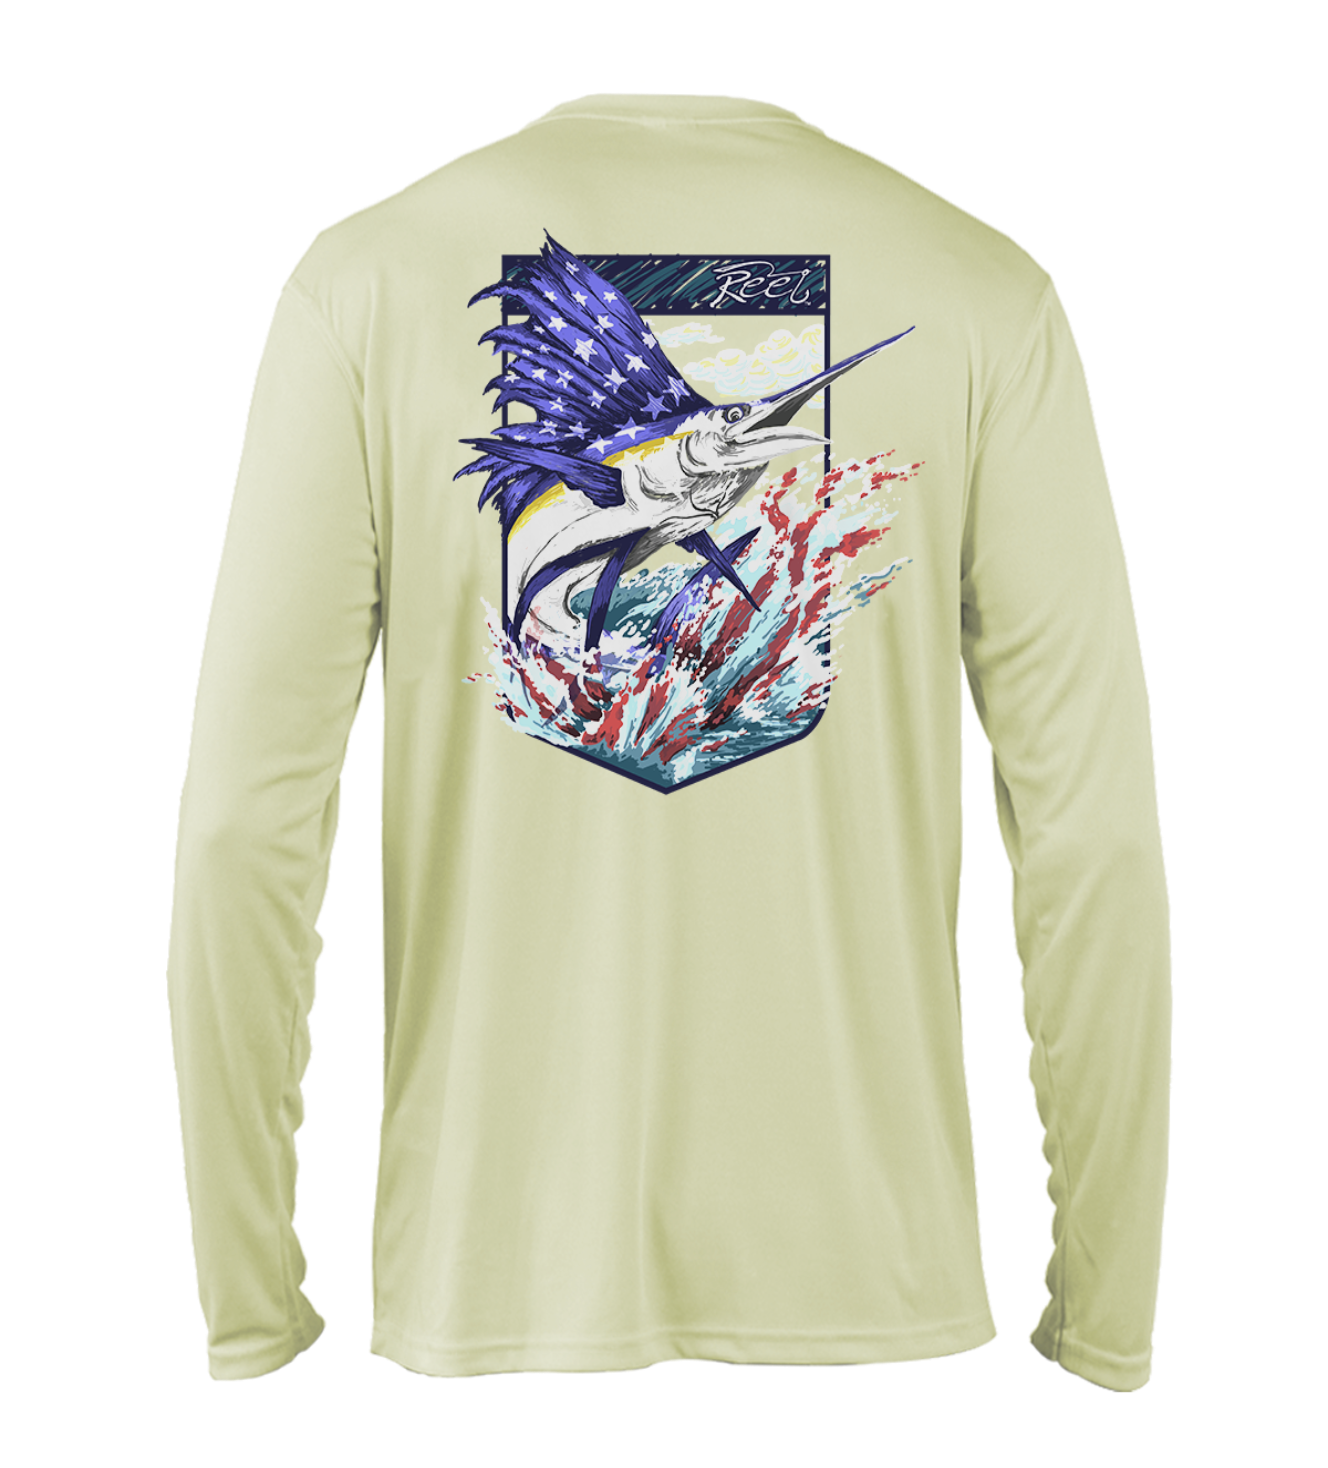 USA Splash Performance Shirt by Reel